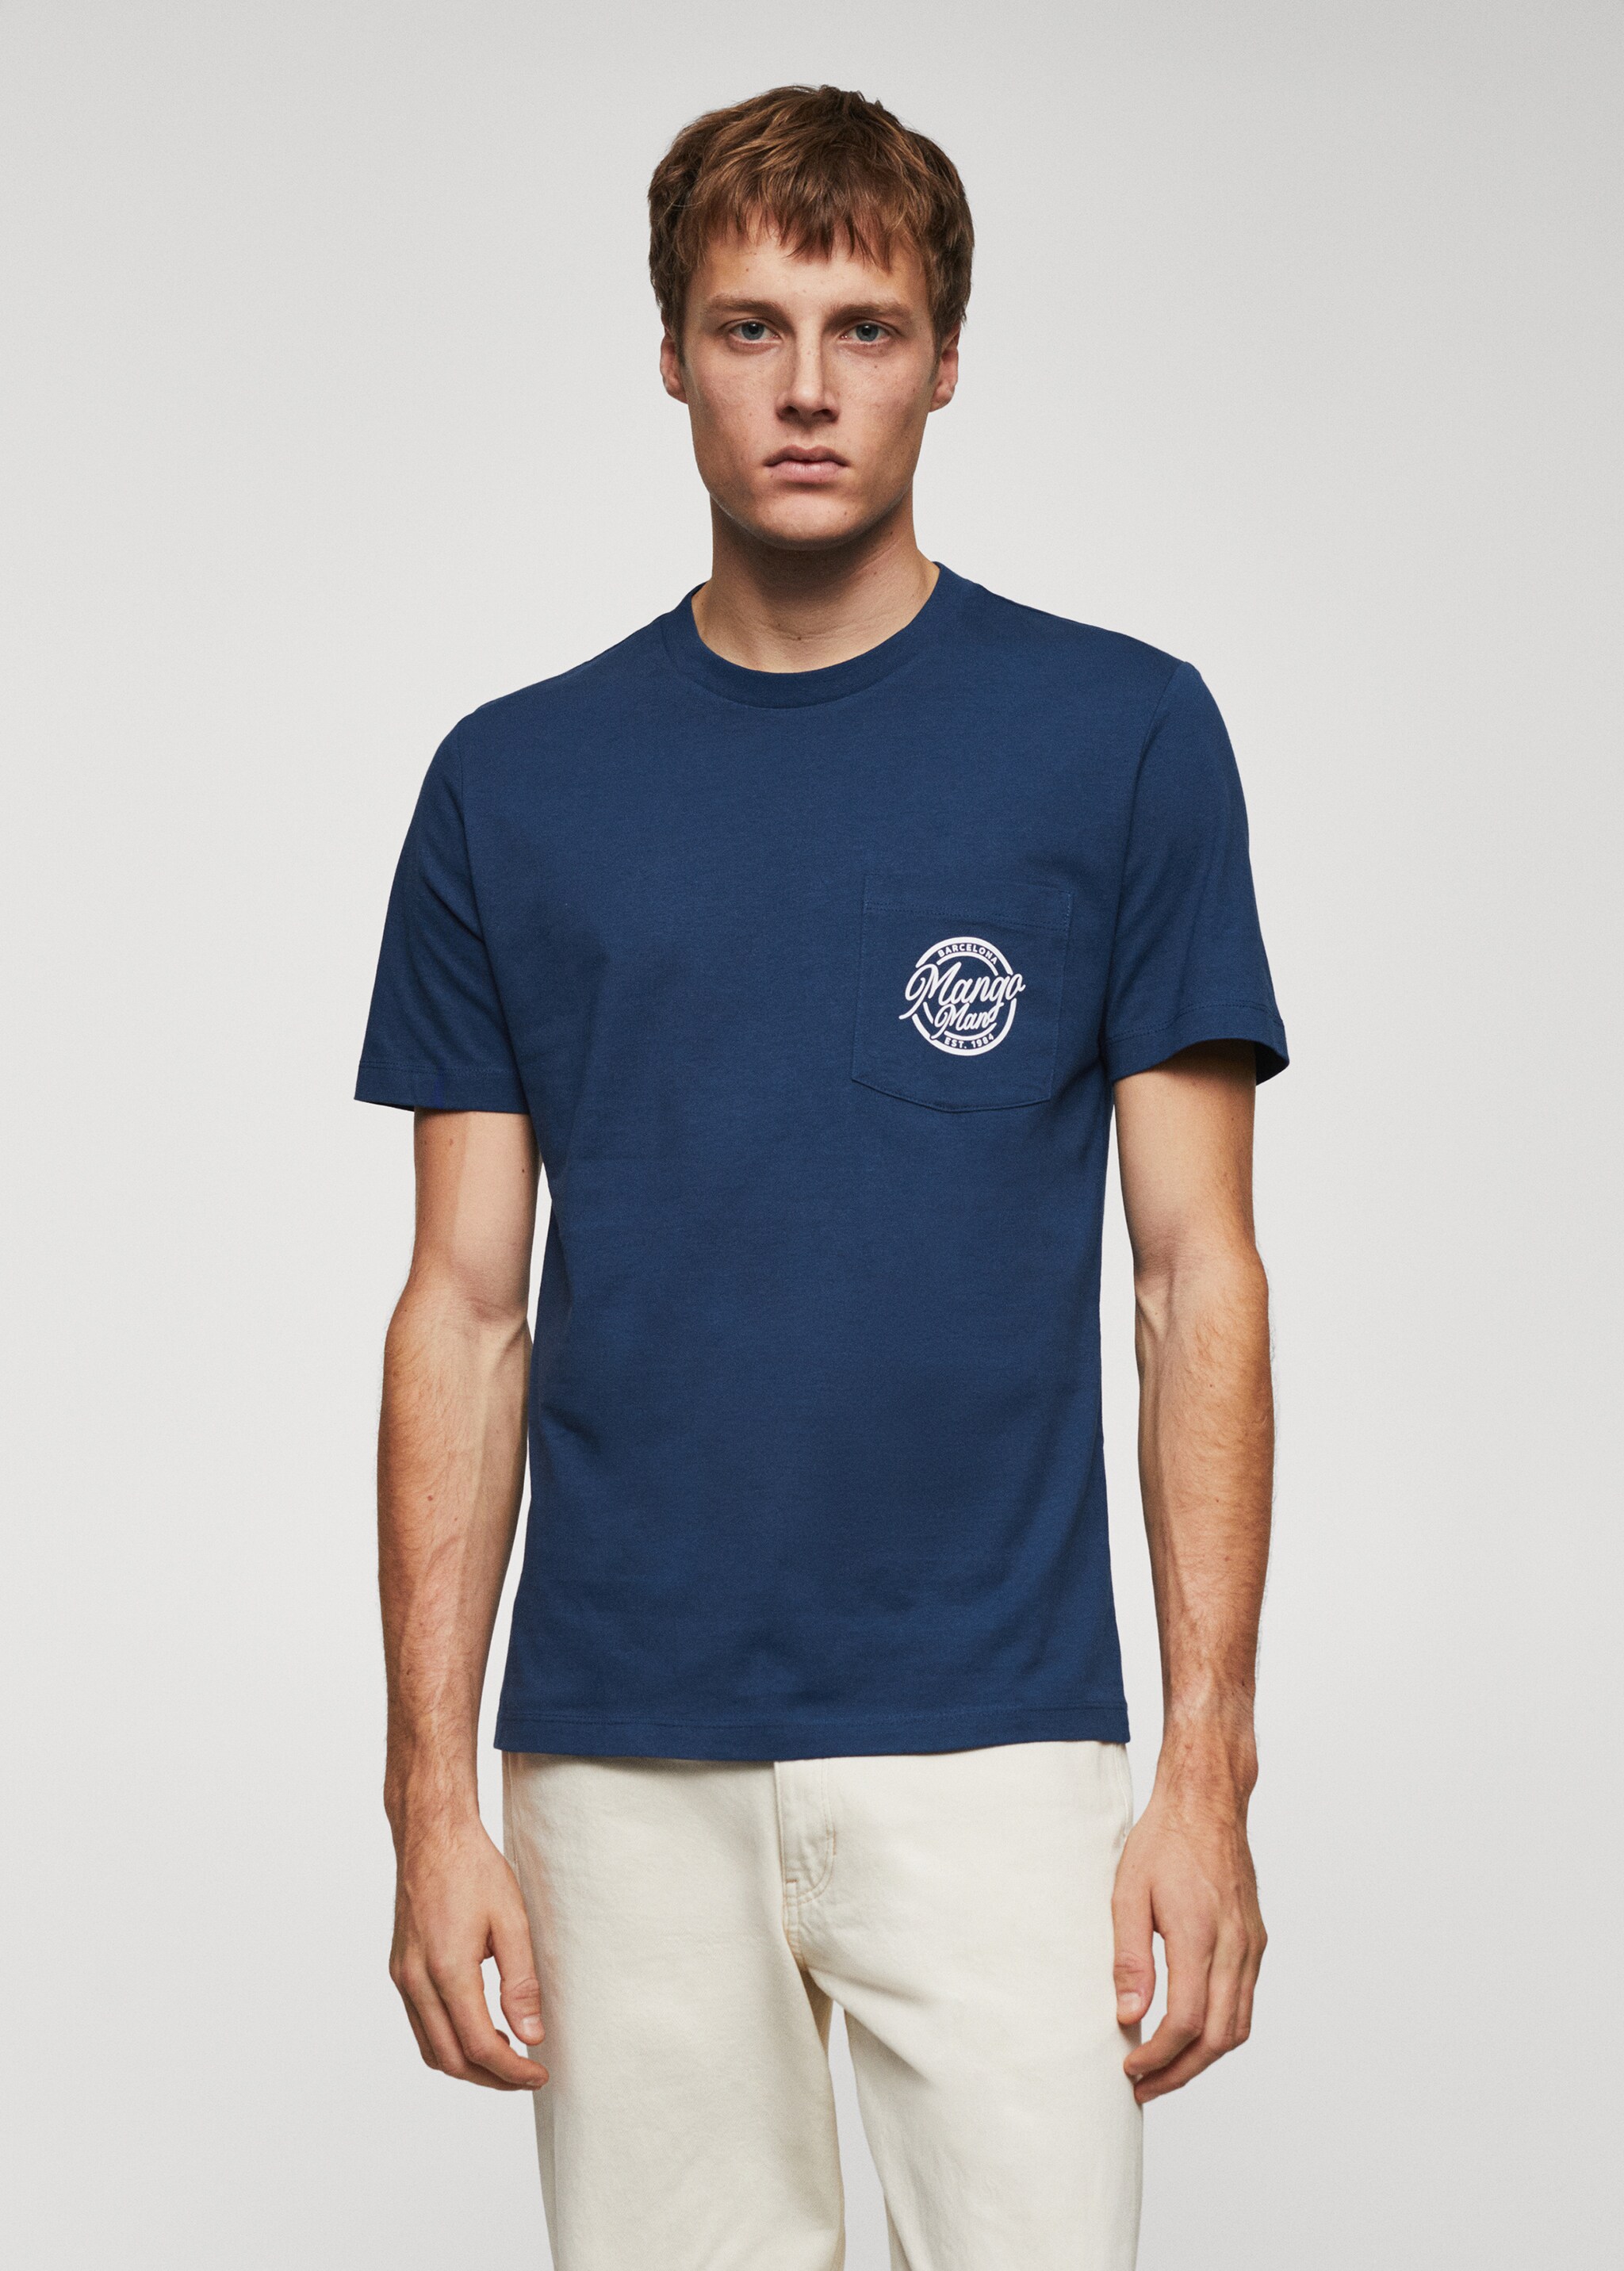 100% cotton t-shirt with logo - Medium plane